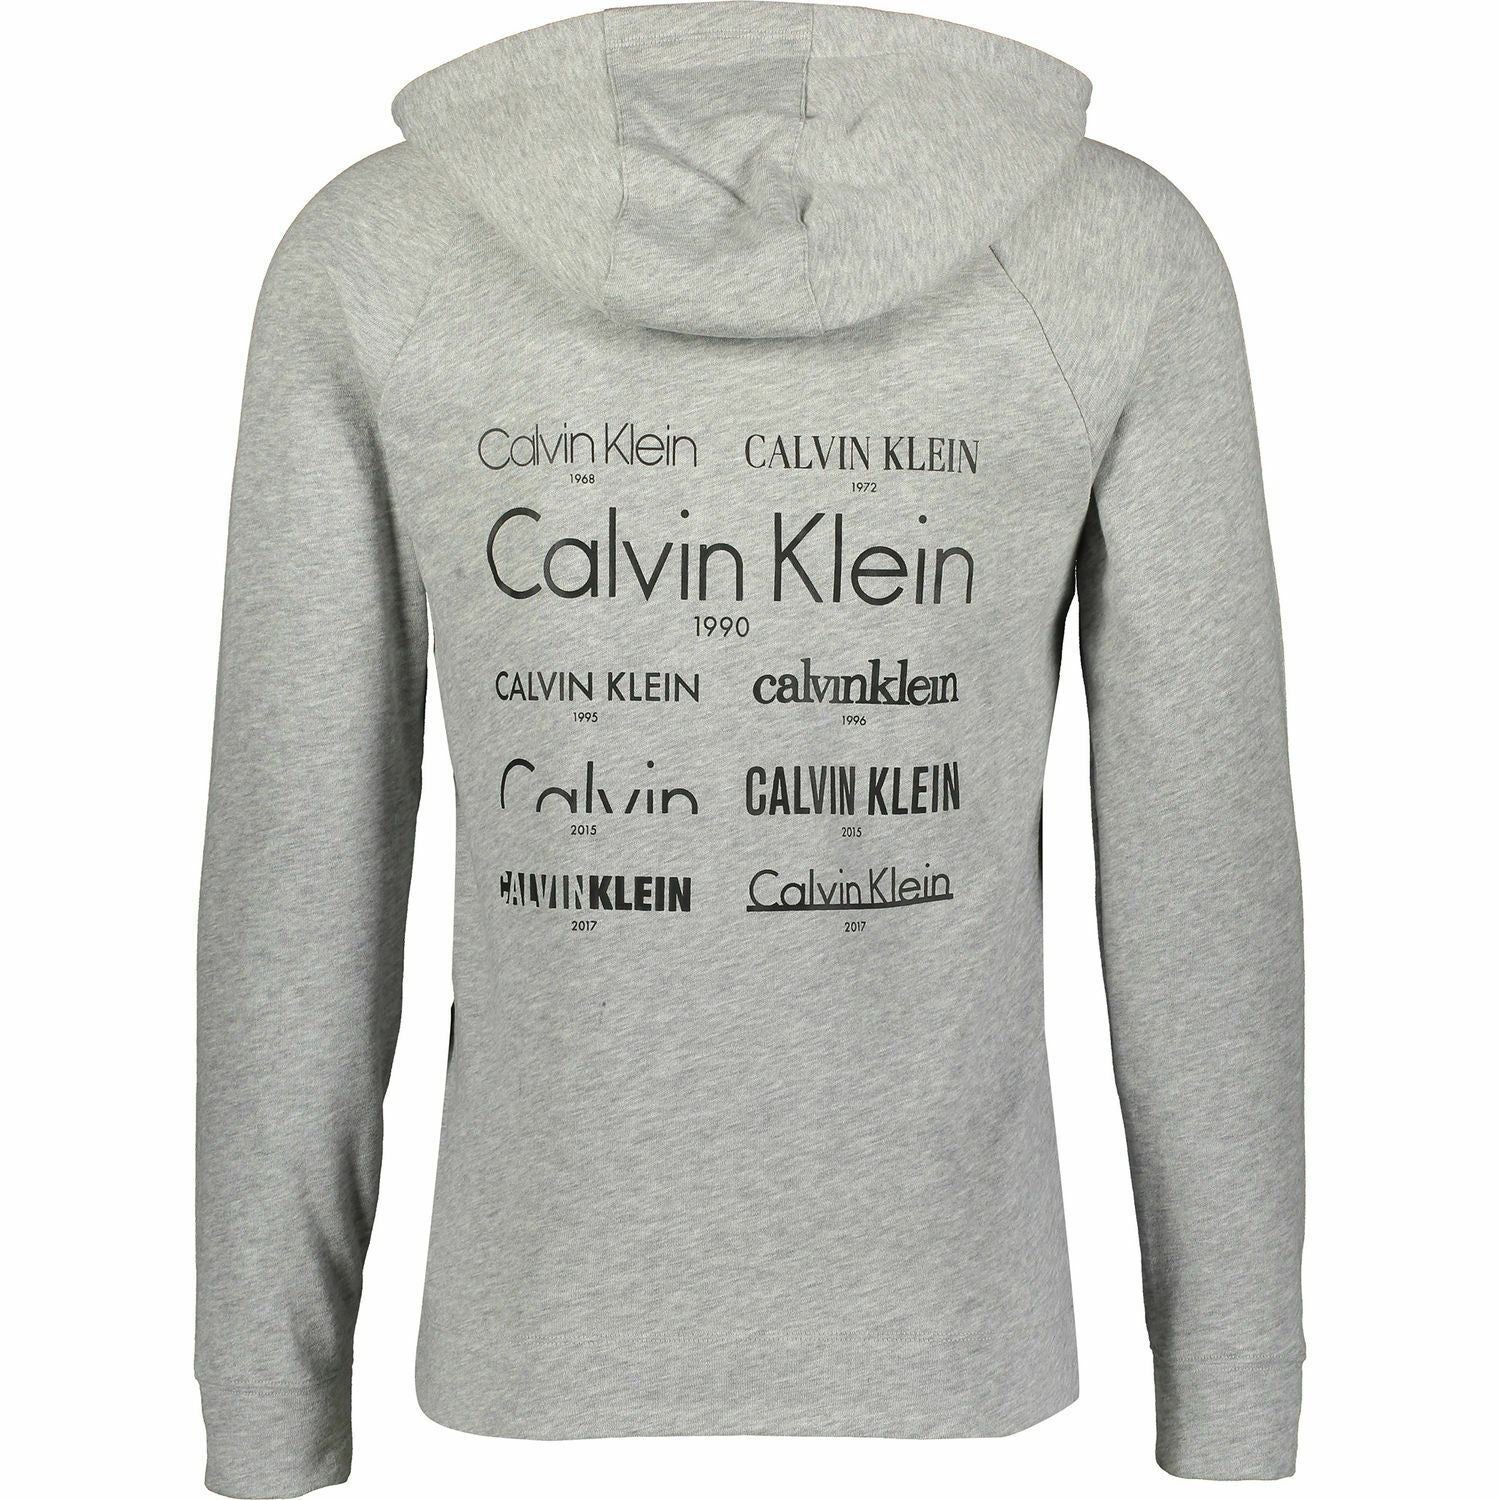 CALVIN KLEIN SLEEPWEAR  Men's Grey Marl Zip Up Lounge Hoodie, size SMALL